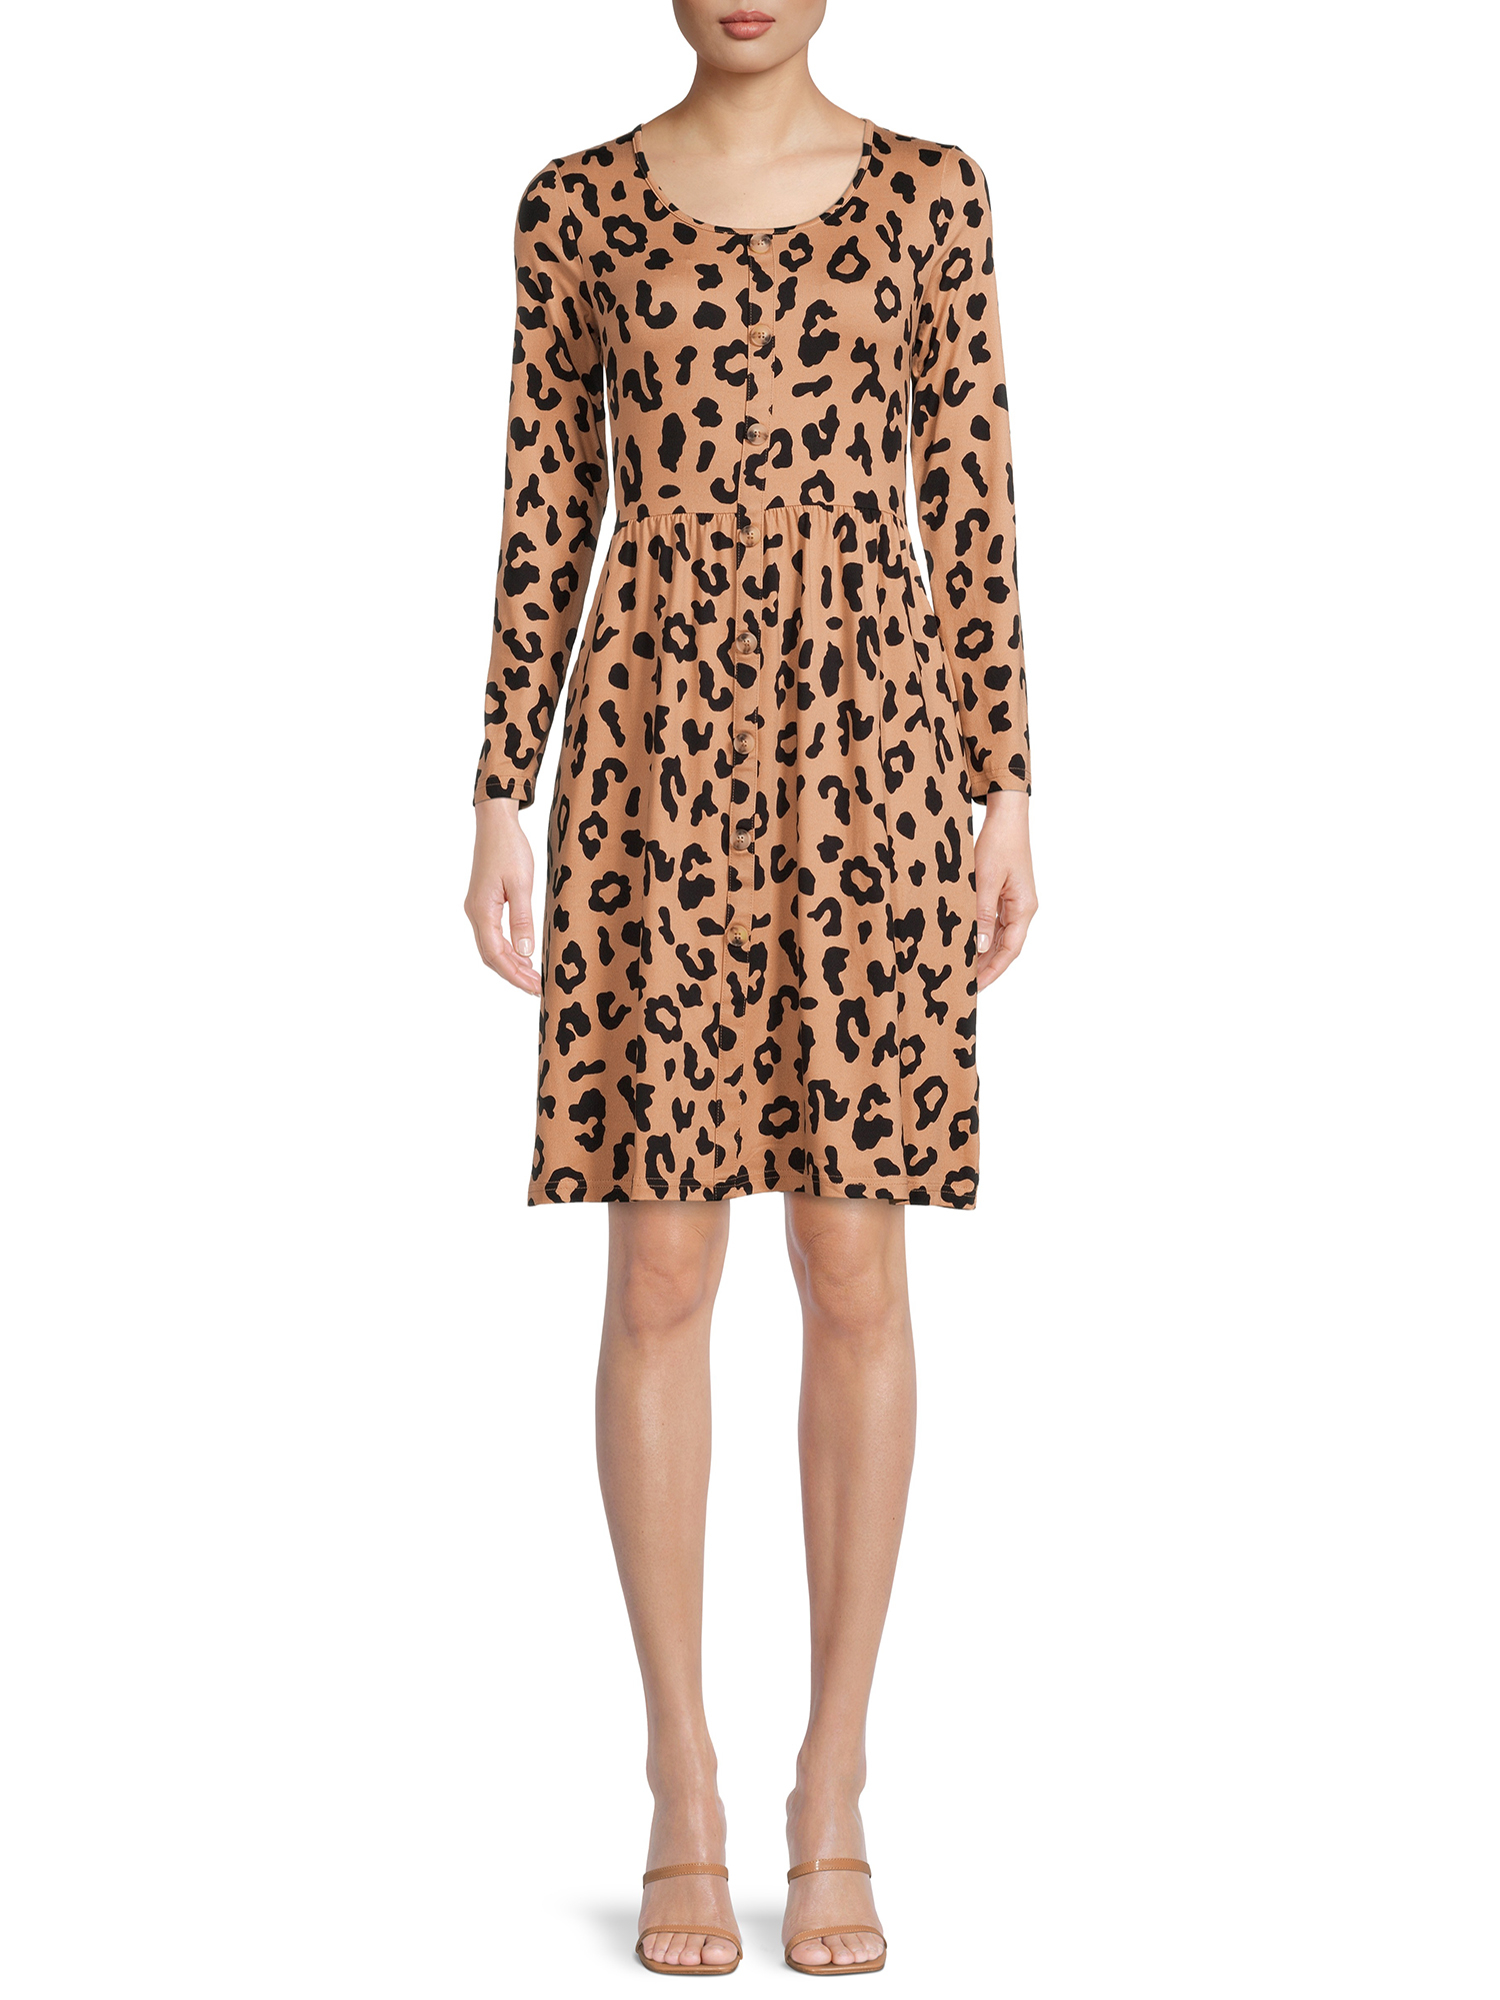 model wearing the cheetah print dress